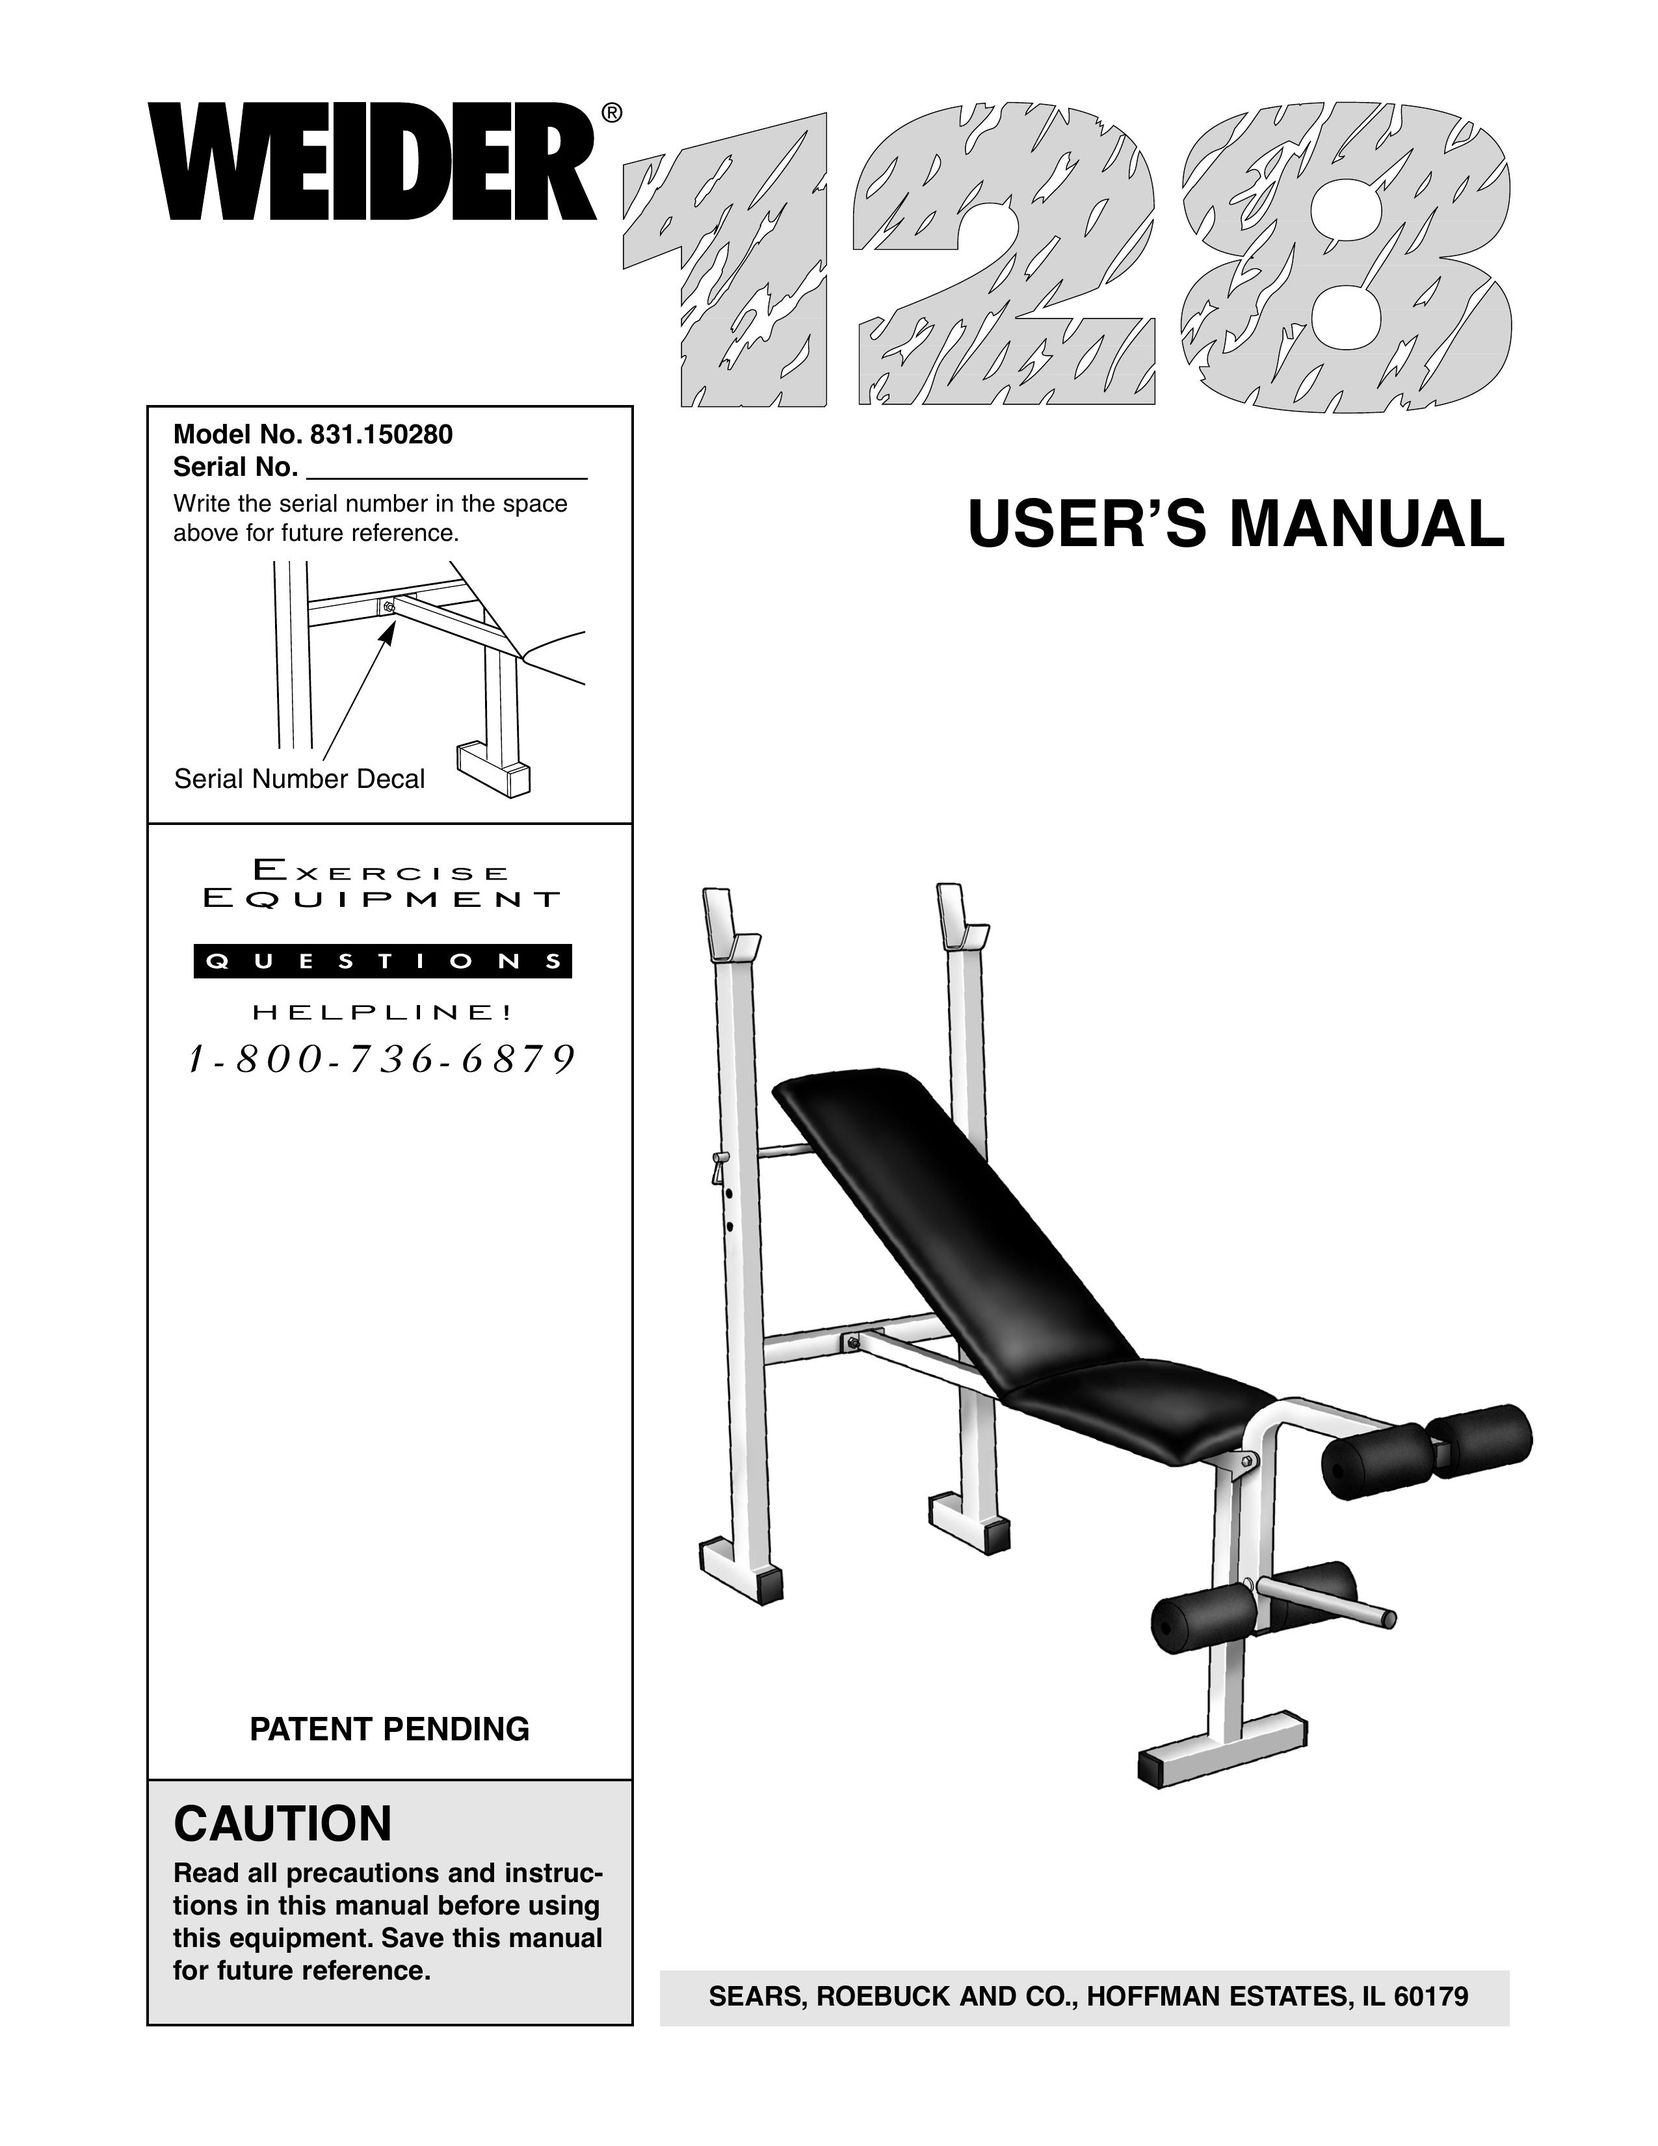 Weider 831.150280 Home Gym User Manual